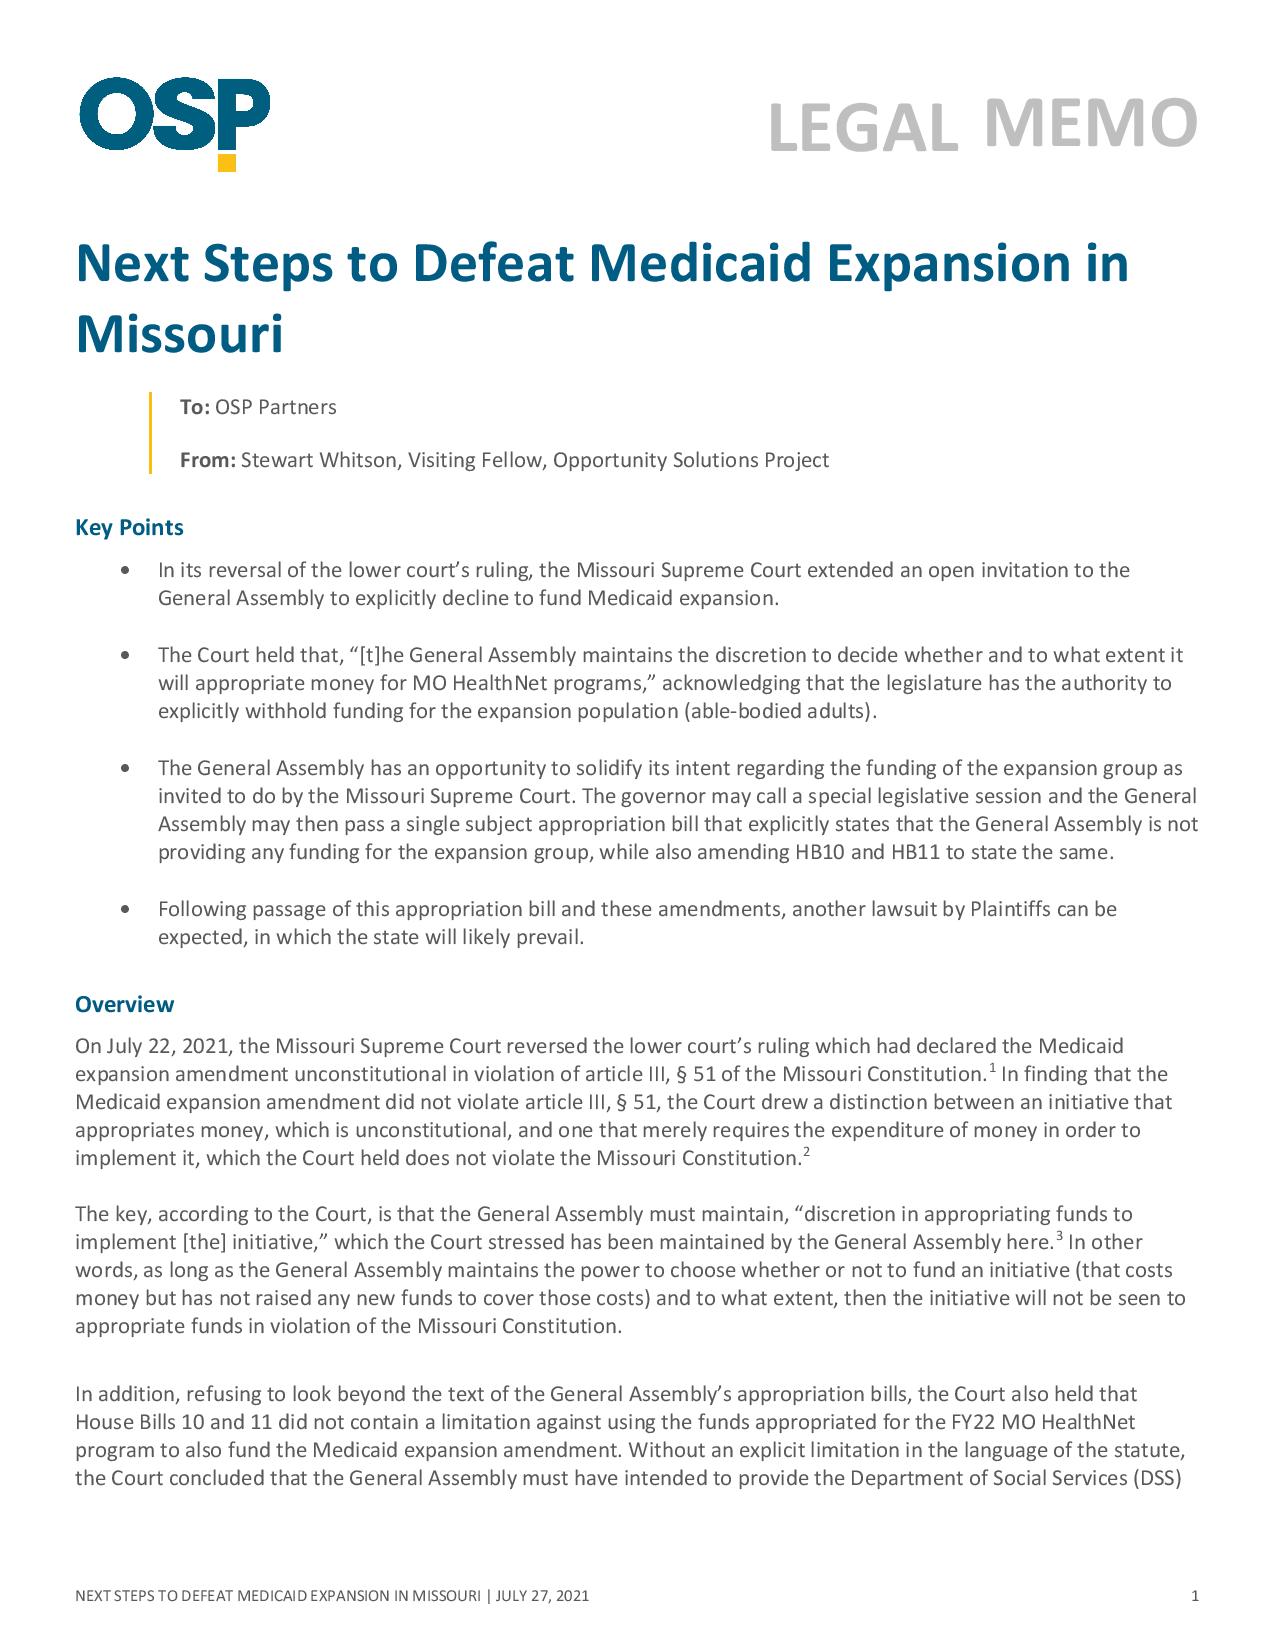 Missouri Medicaid Expansion Next Steps